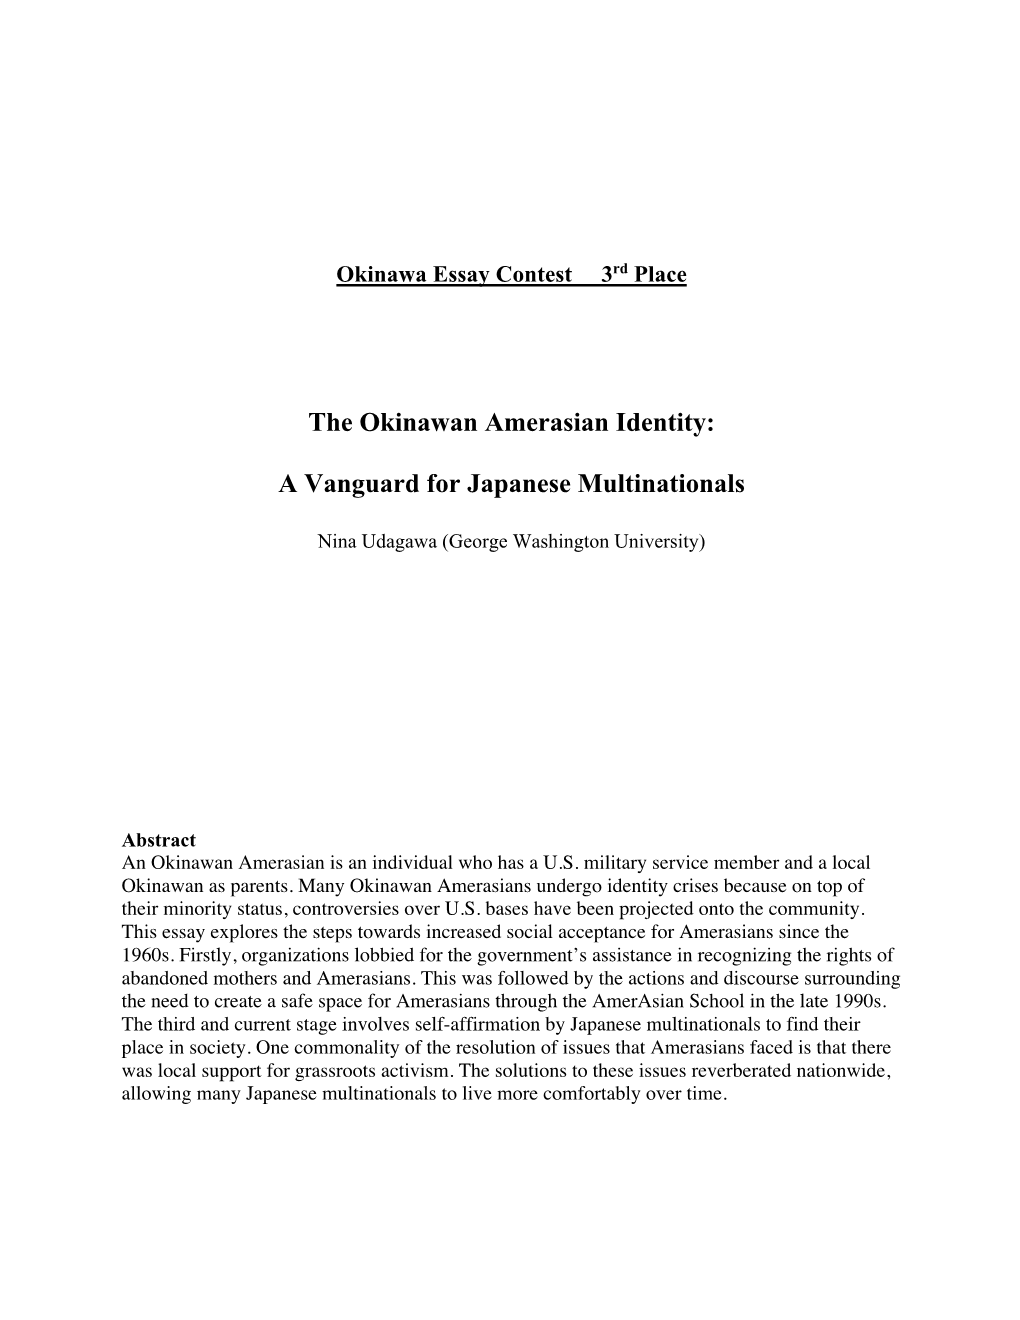 The Okinawan Amerasian Identity: a Vanguard for Japanese Multinationals